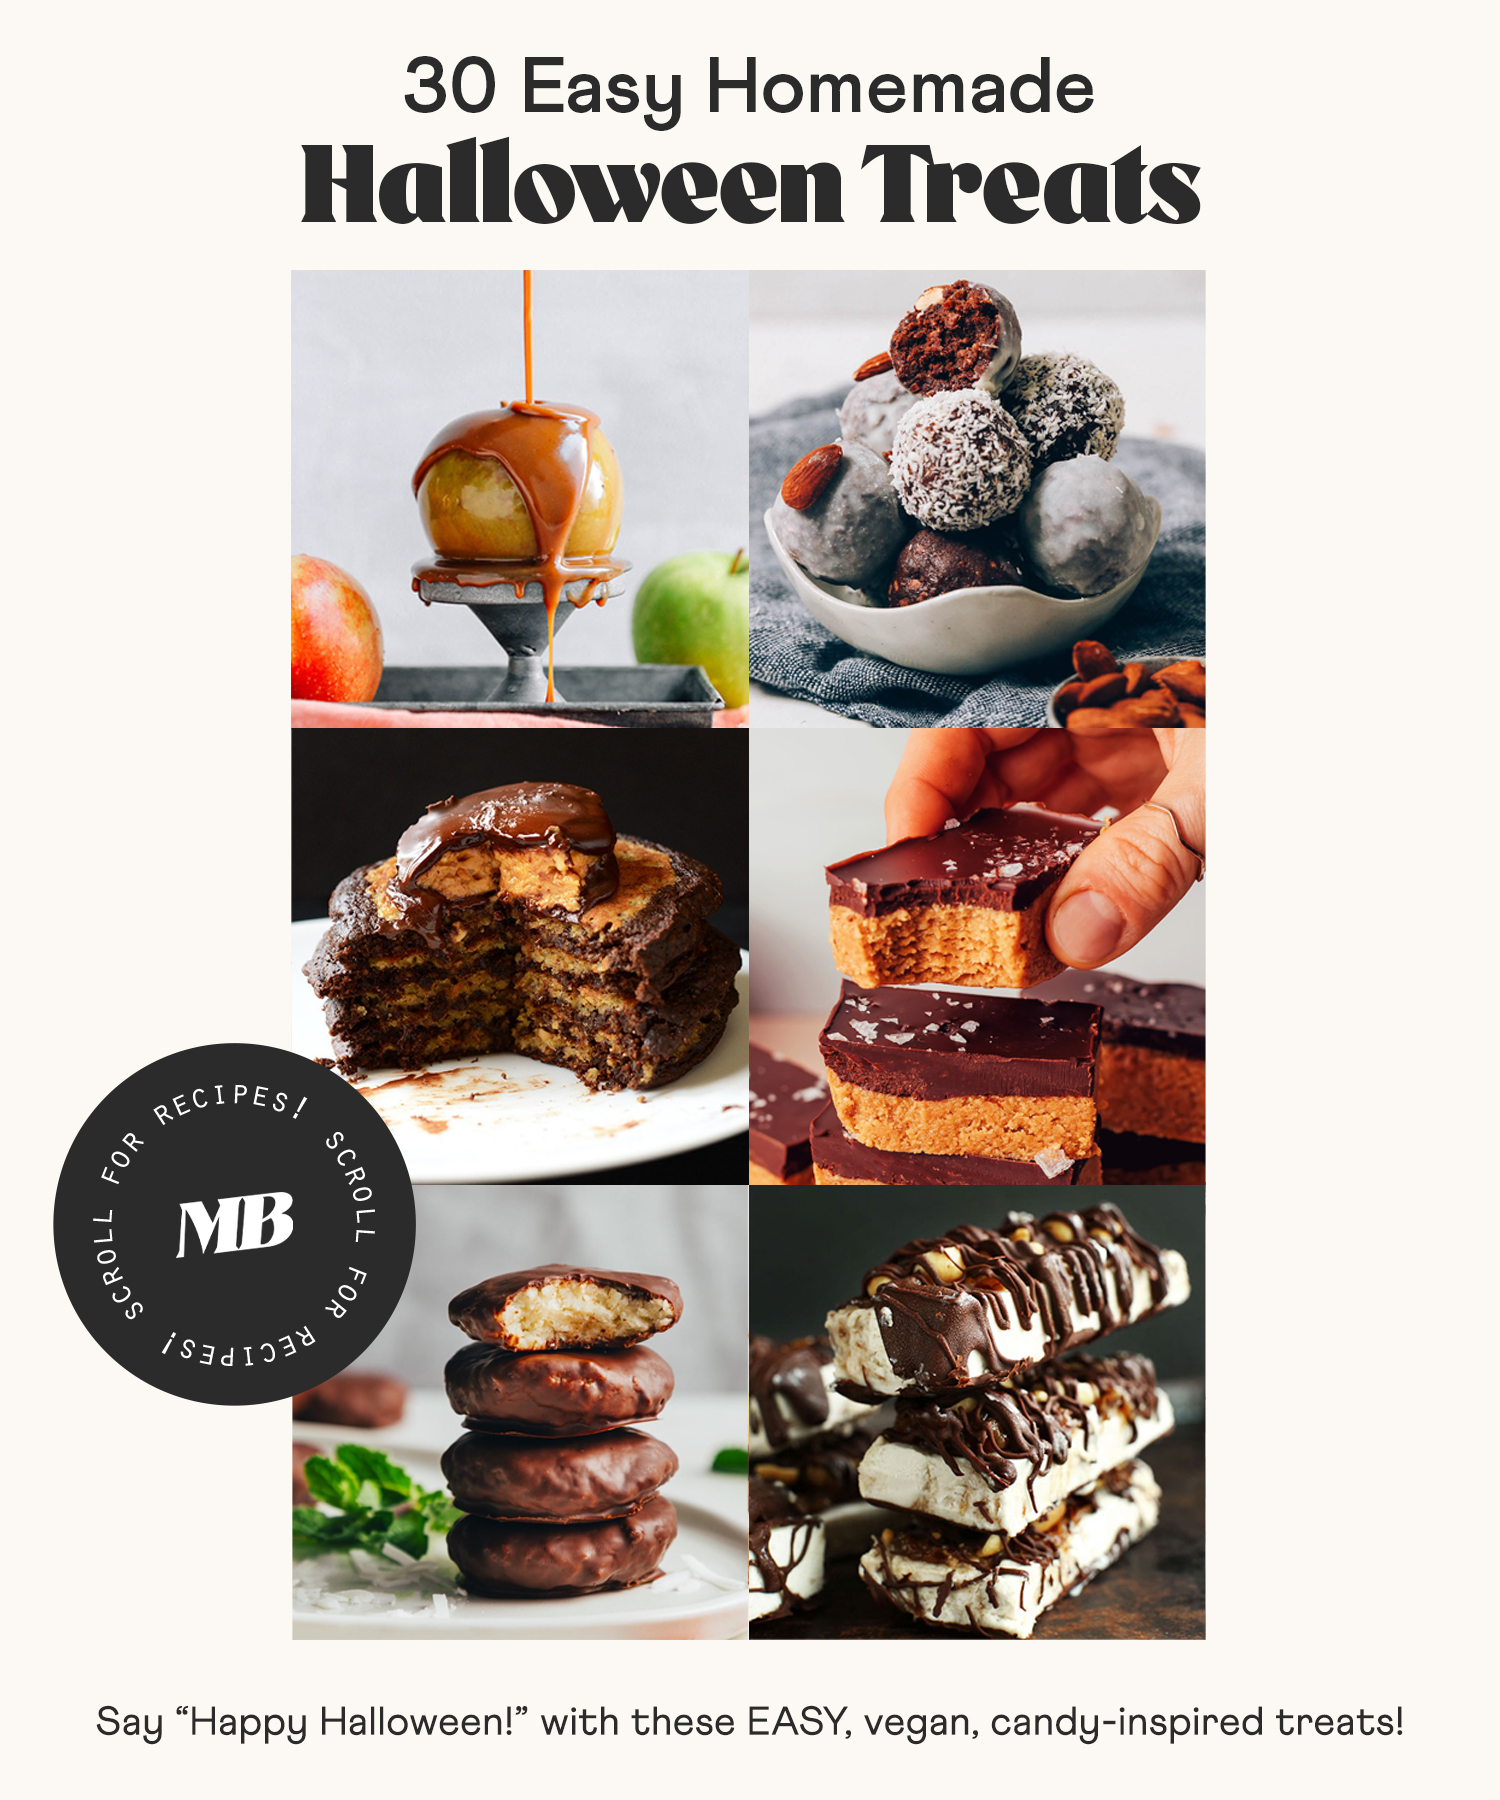 Caramel sauce, almond joy energy bites, peanut butter cup bars and other homemade halloween treats